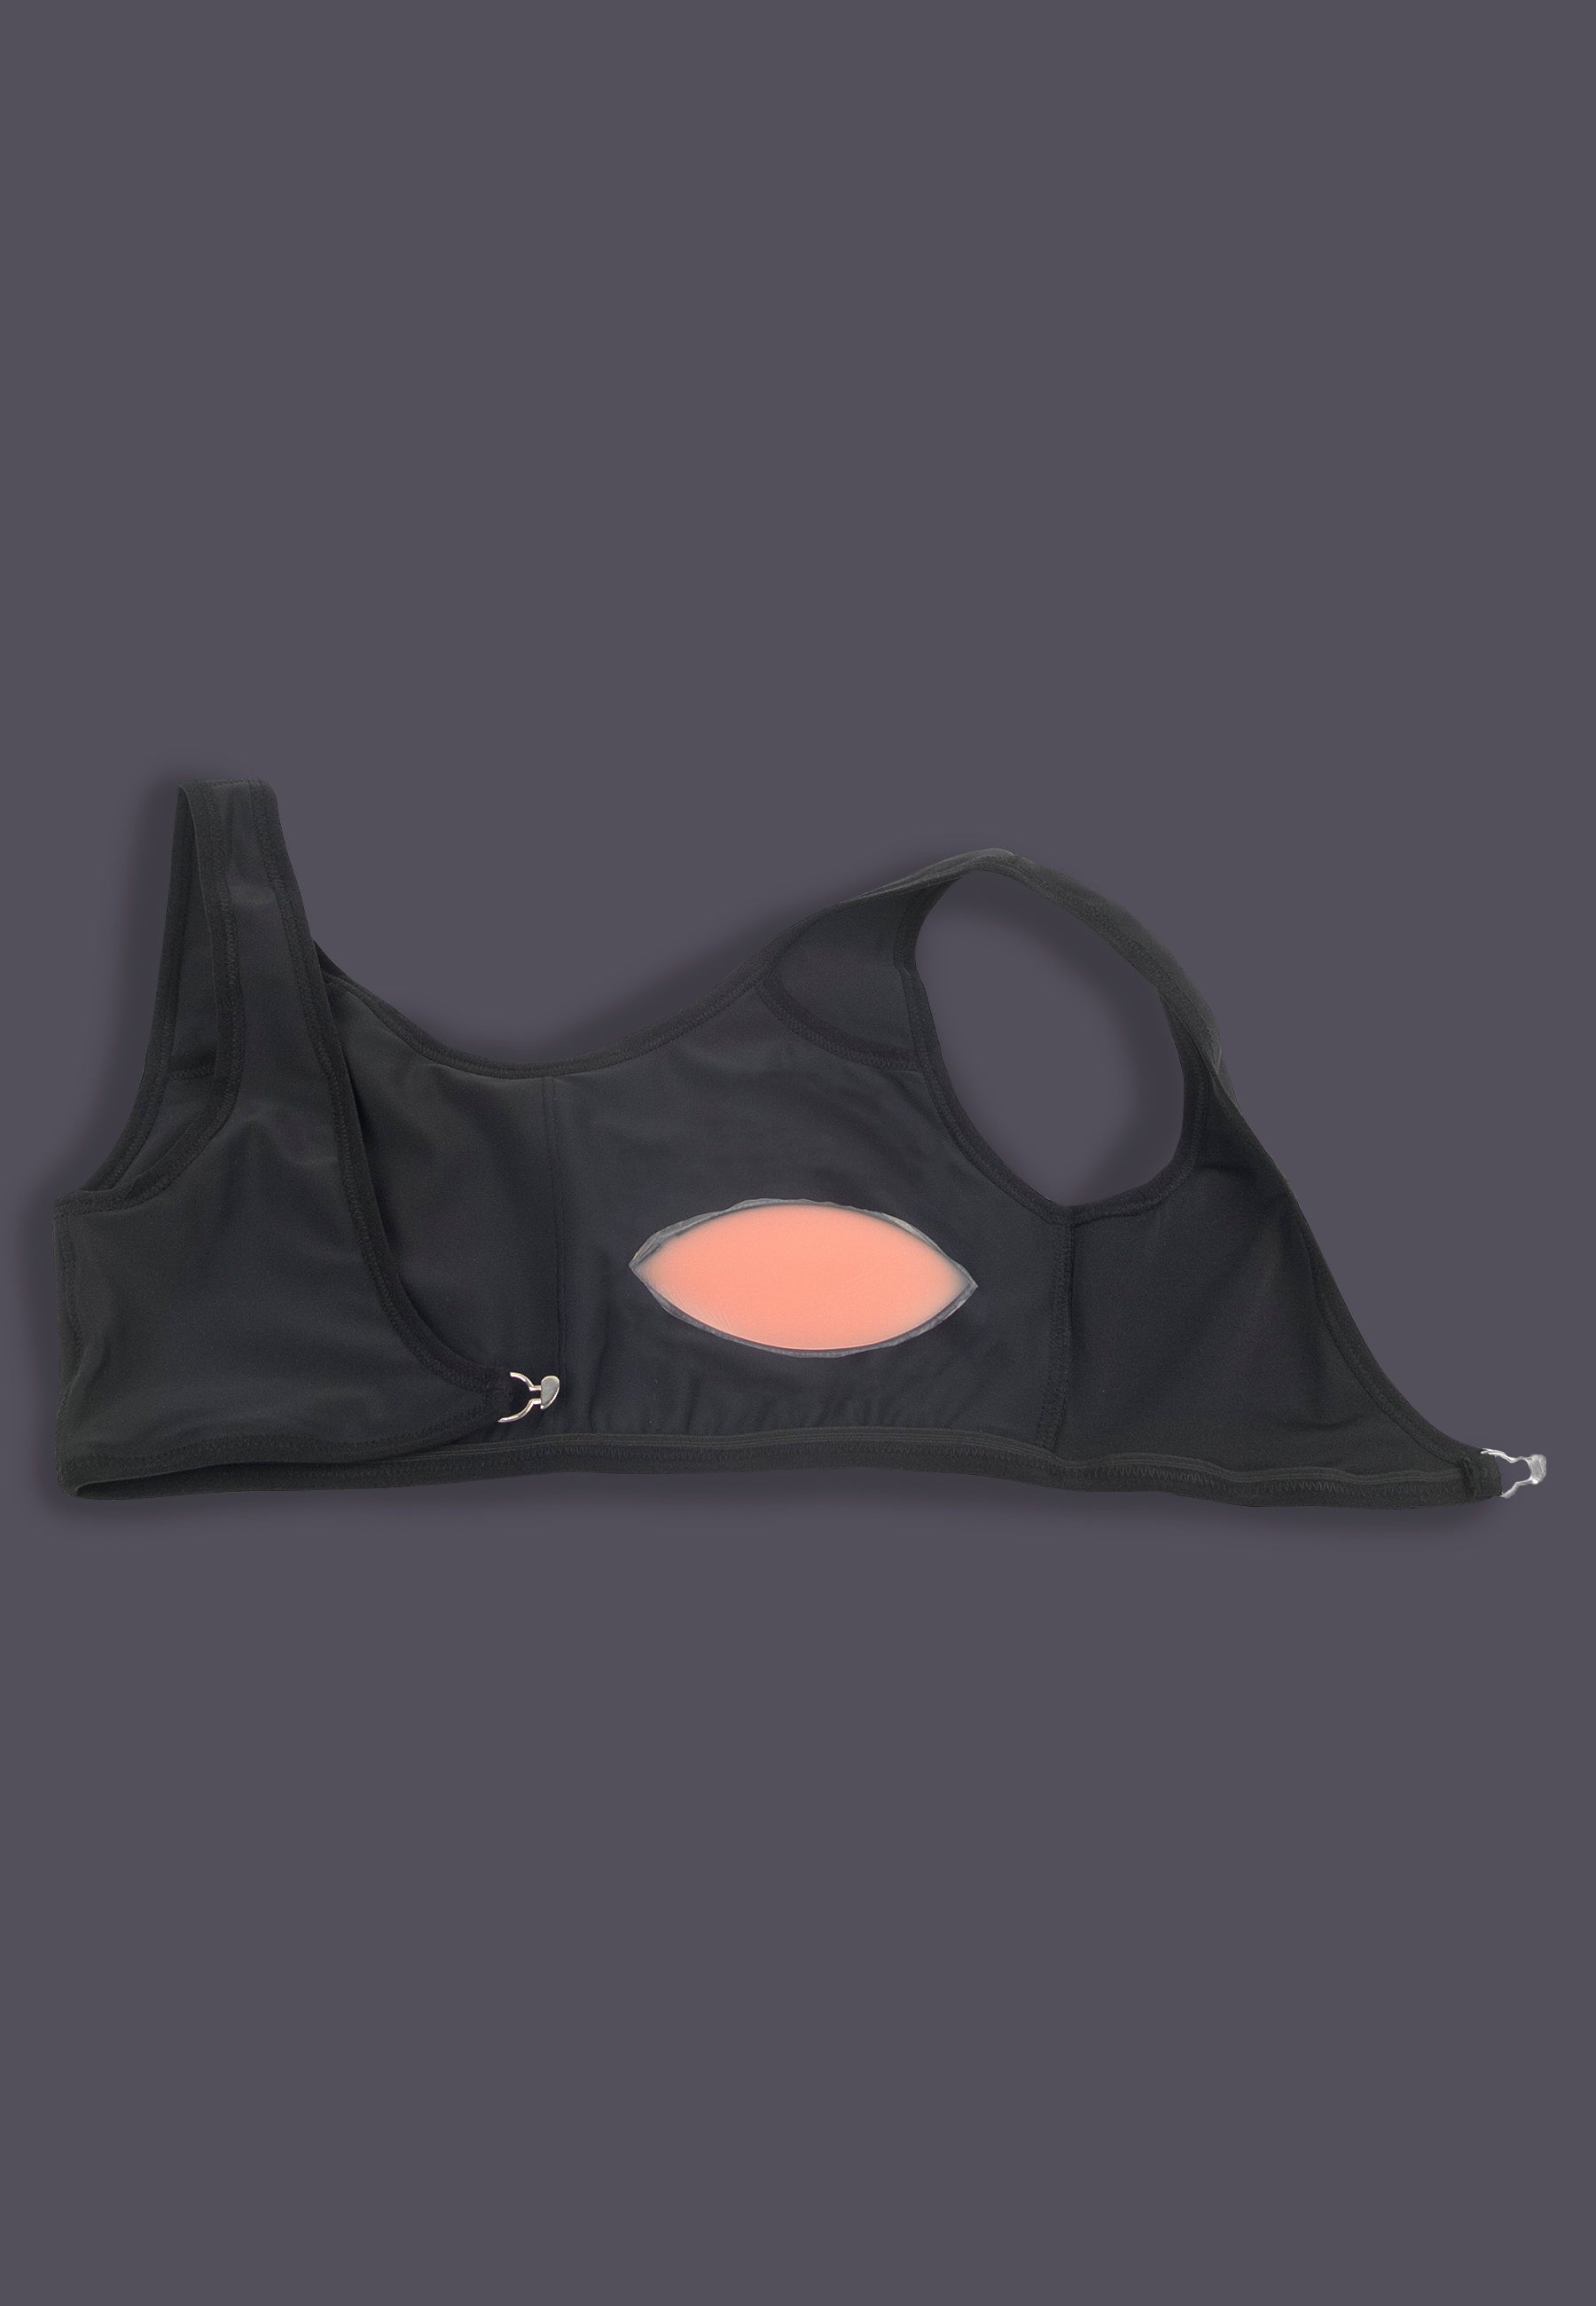 The Silicone Breastpads oval inside the Bikinitop